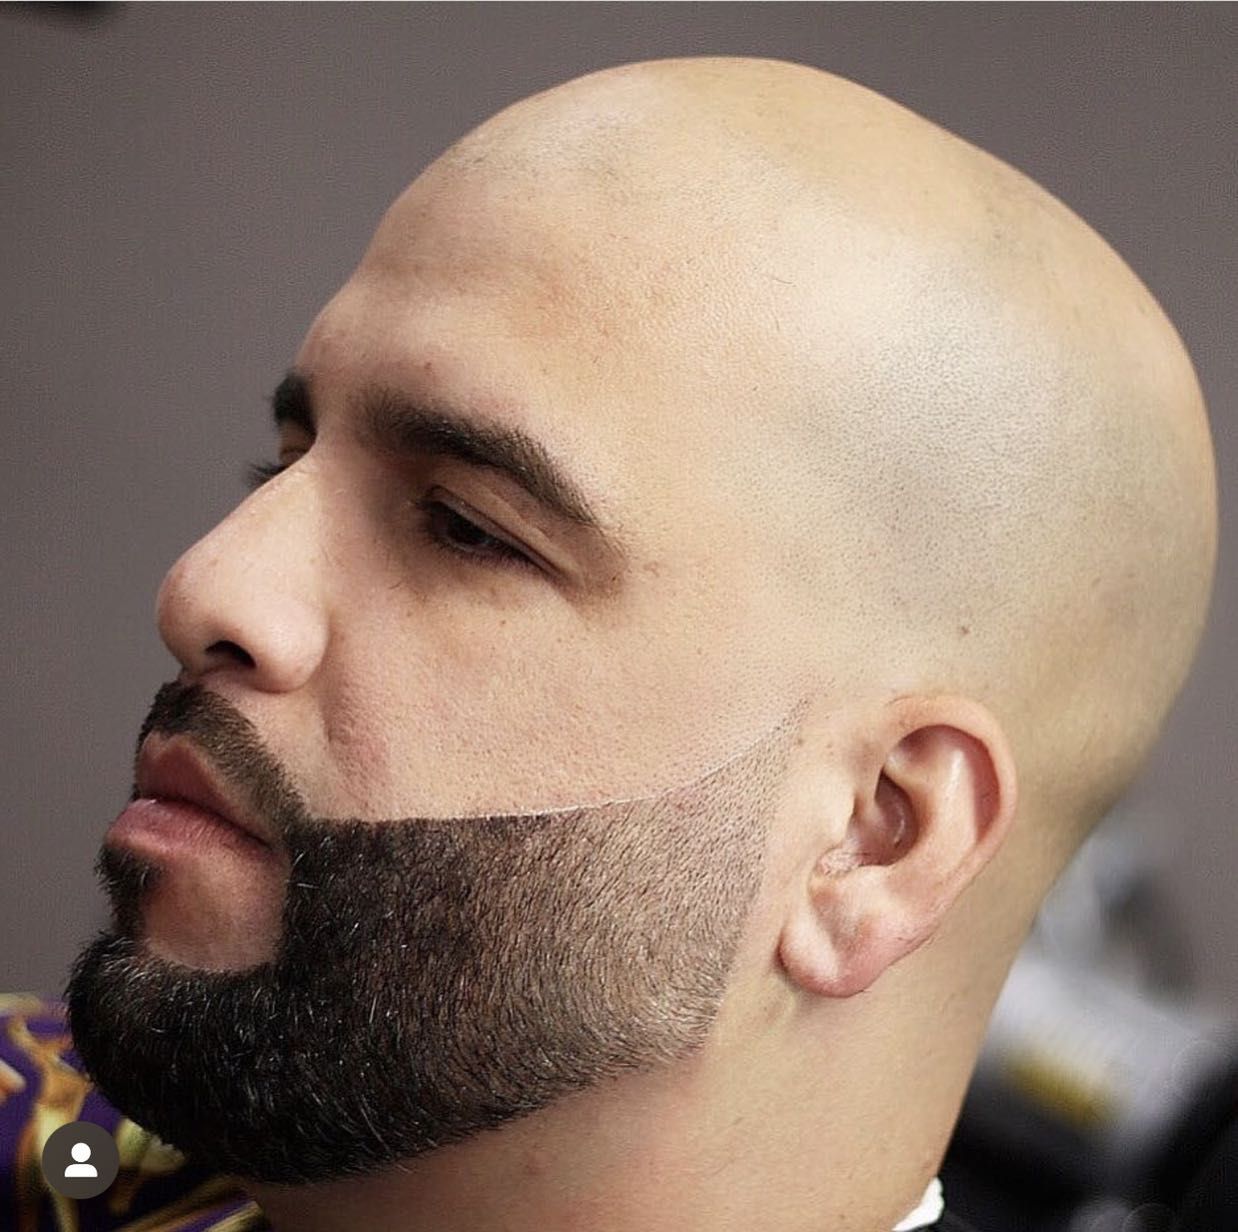 Bald shave + beard portfolio